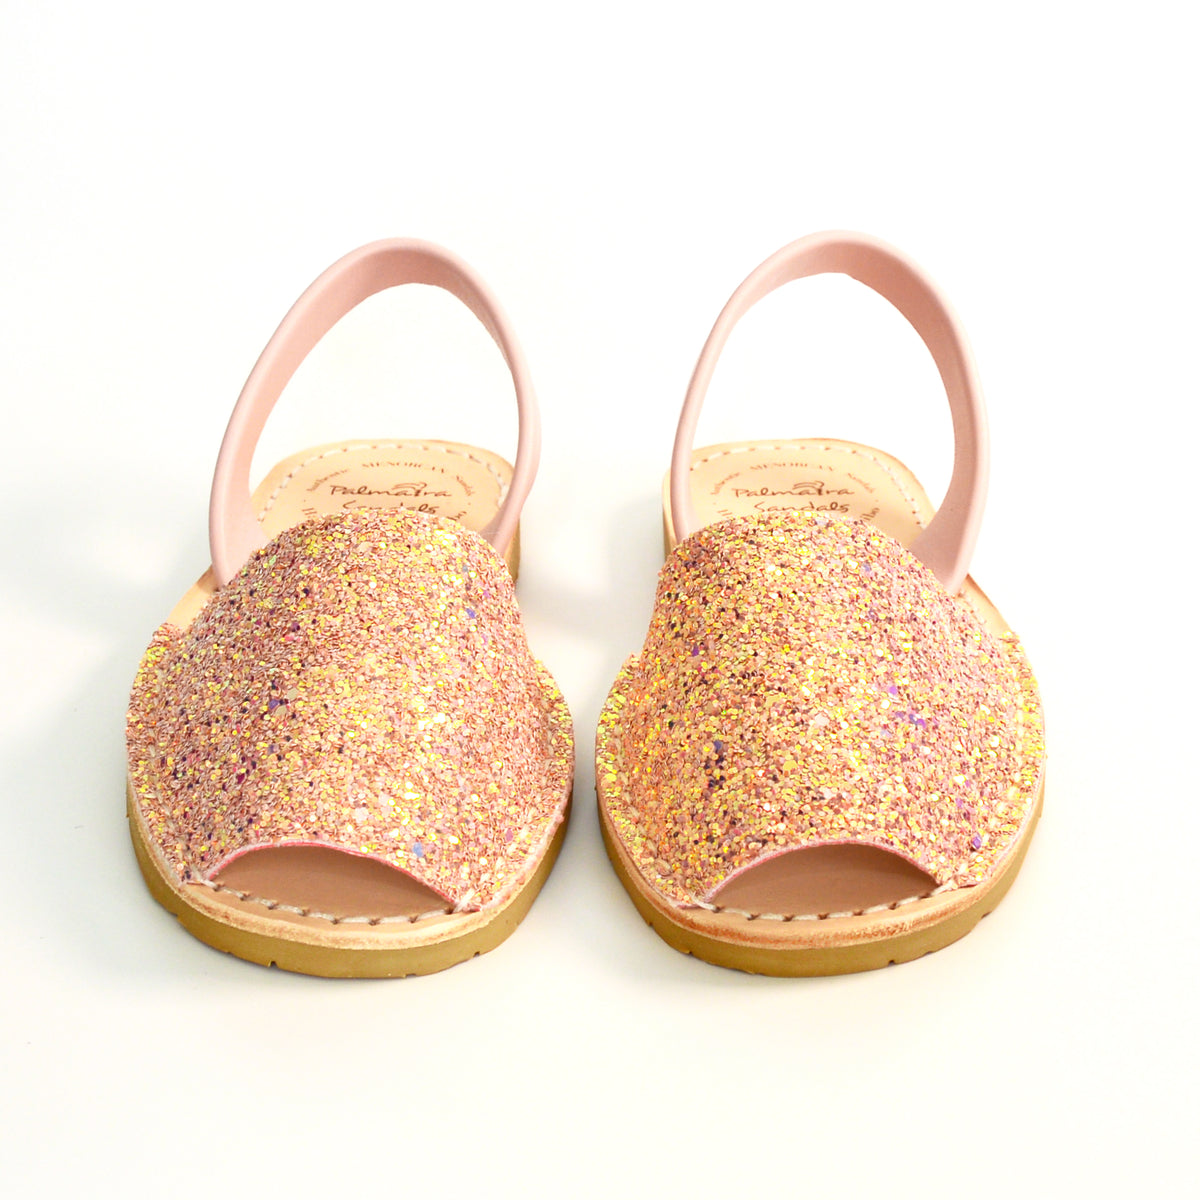 Iridescent peachy pink multi glitter avarcas pale pink spanish sandals 